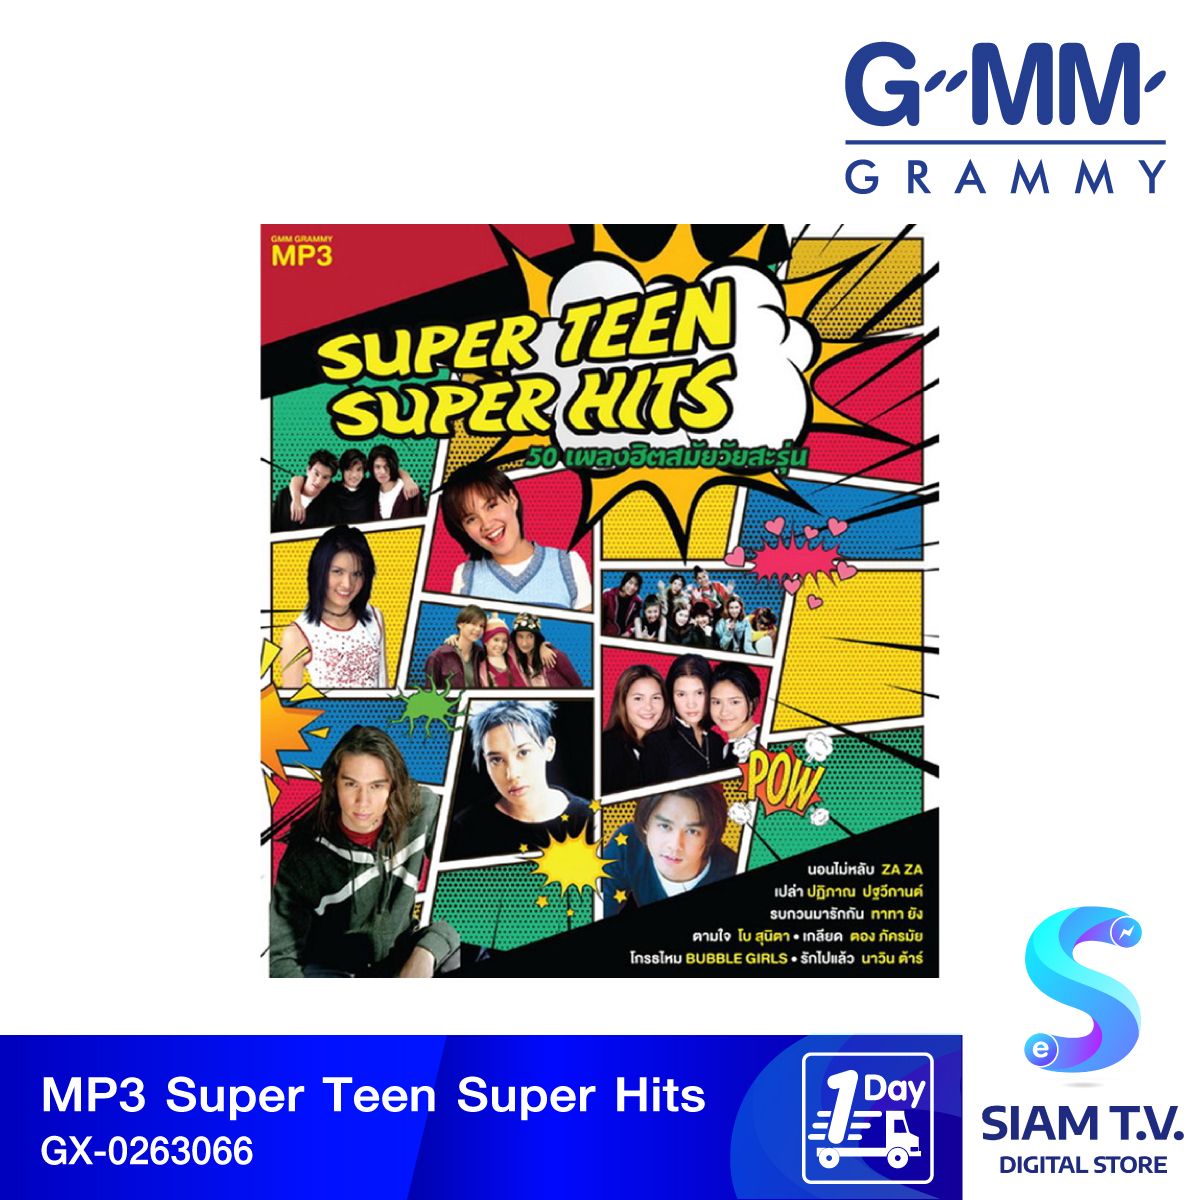 GMM GRAMMY MP3 Super Teen Super Hits